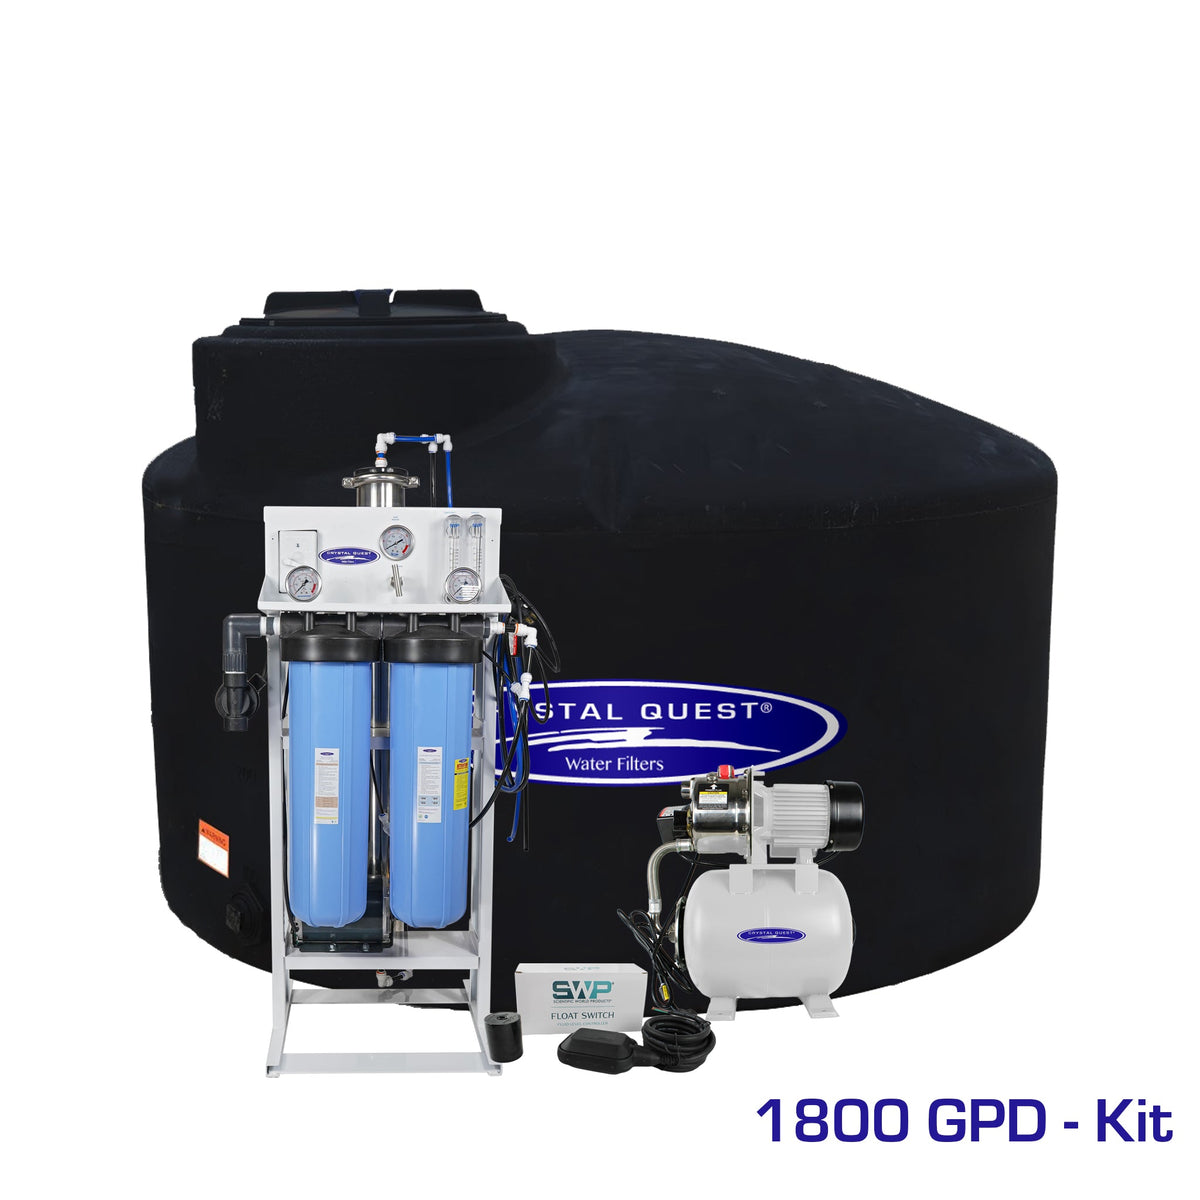 1800 GPD / Add Storage Tank Kit (550 Gal) Whole House Reverse Osmosis System - Reverse Osmosis System - Crystal Quest